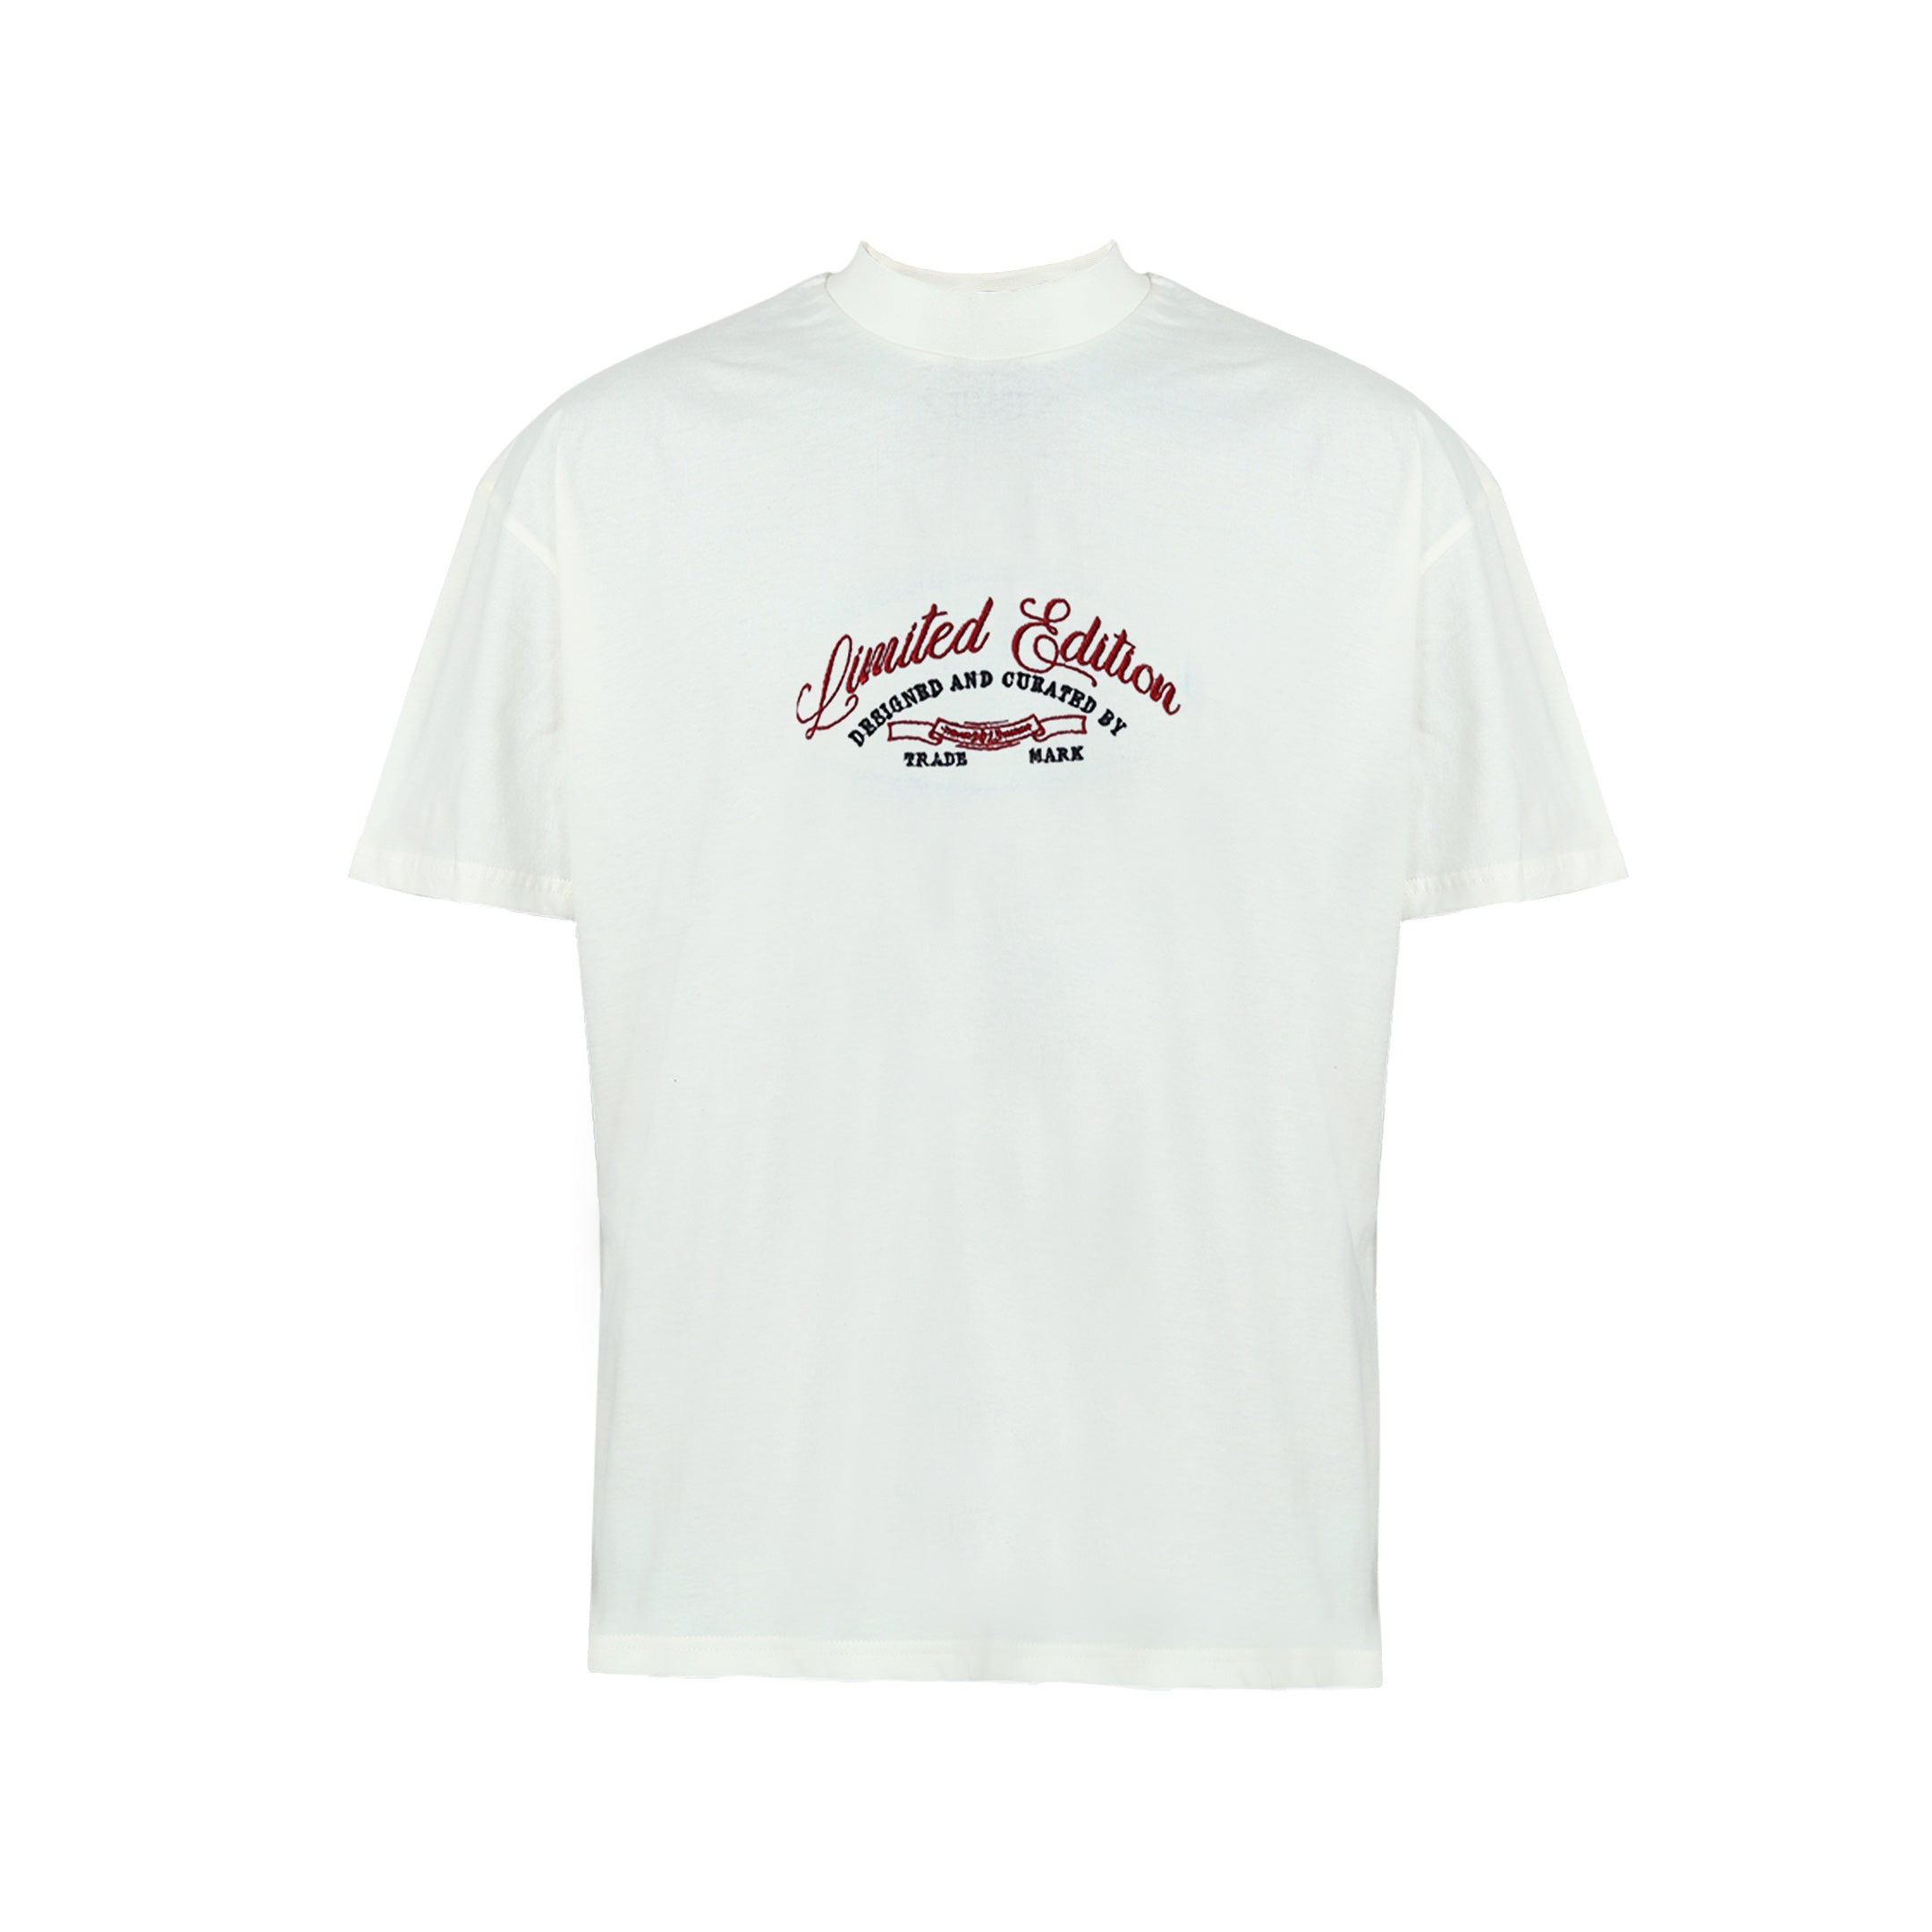 Boohoo Man T-Shirt White Limited Edition